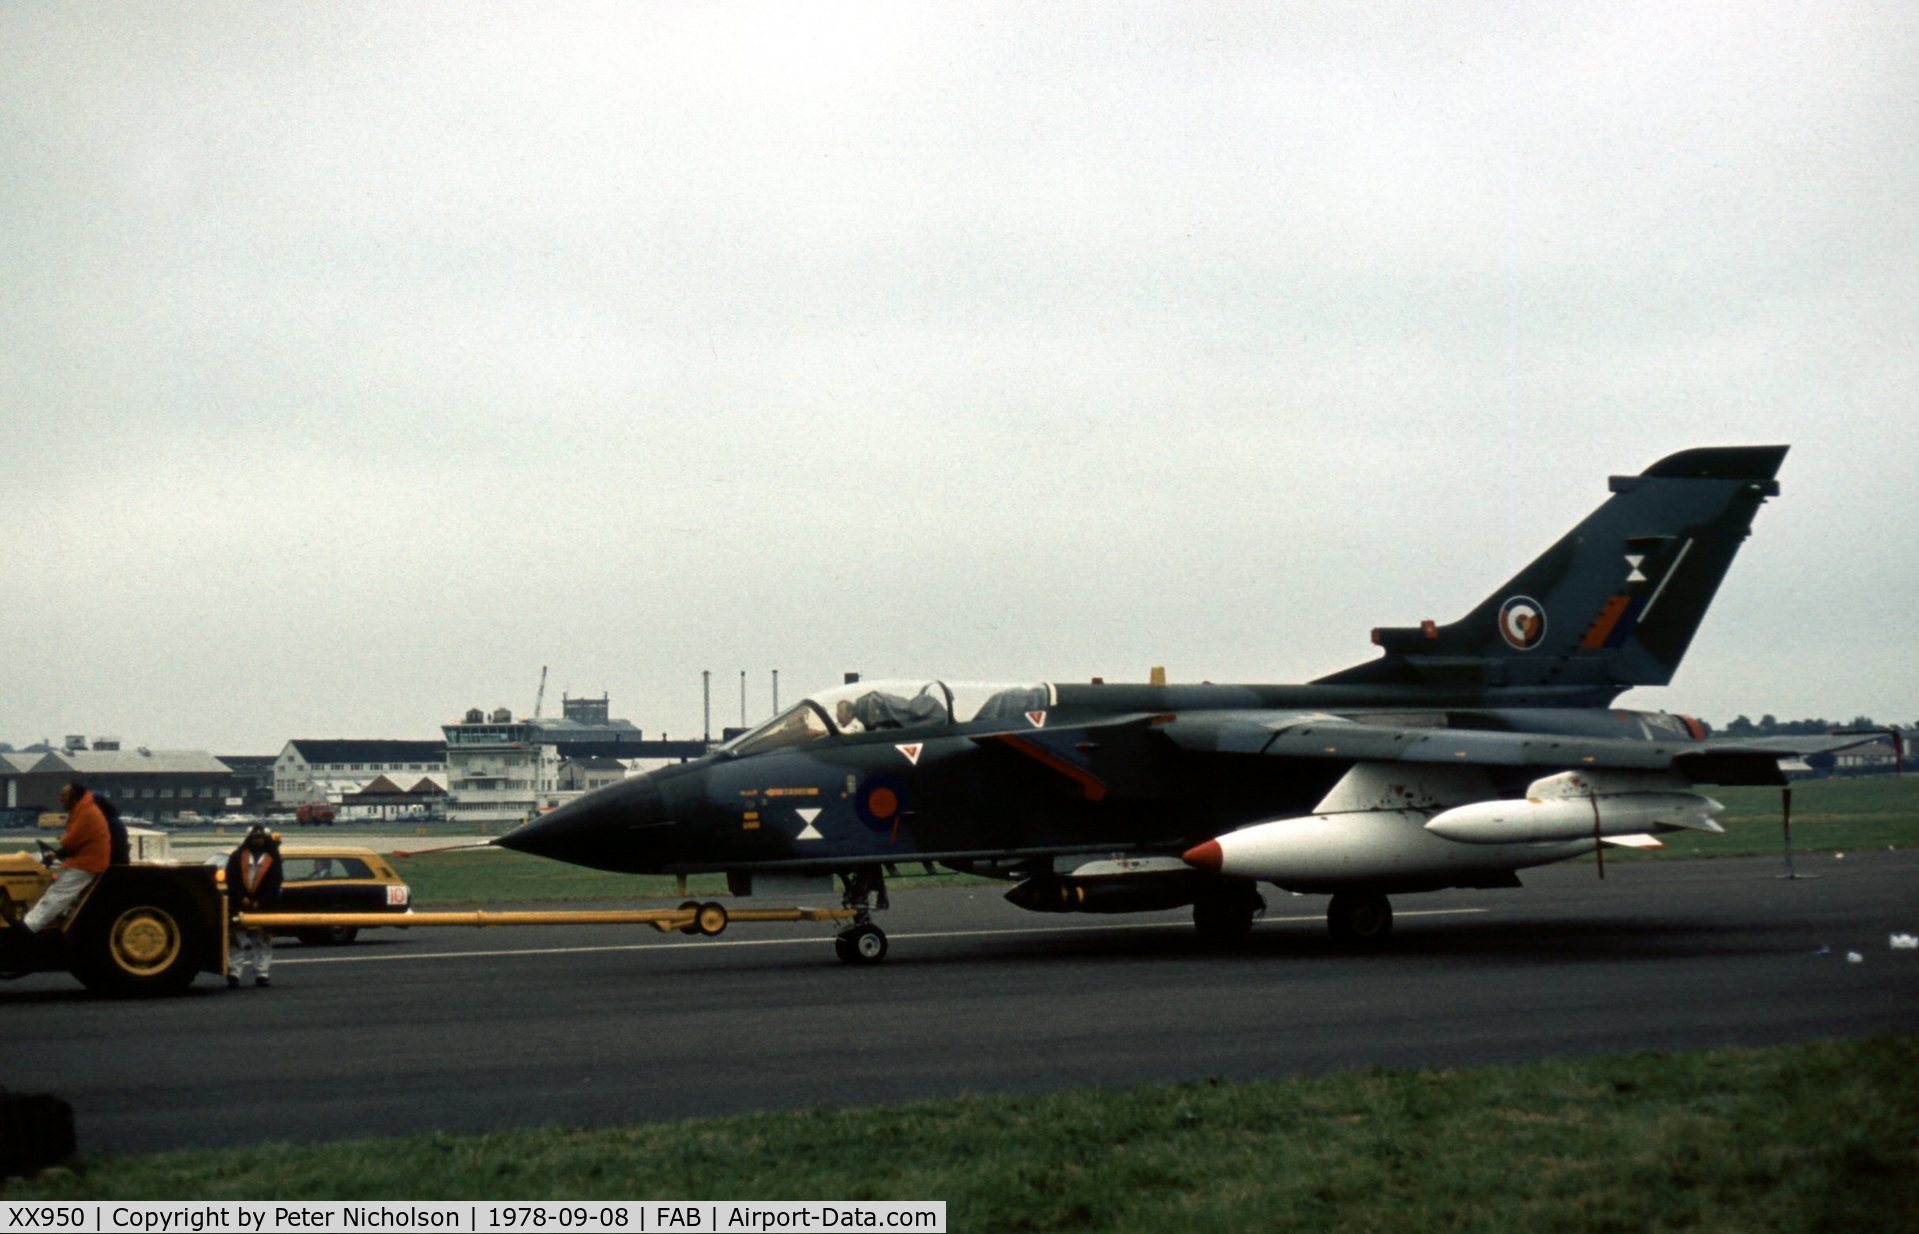 XX950, 1976 Panavia Tornado GR.1 C/N P.08, Tornado prototype number 8 demonstrated at the 1978 Farnborough Airshow.